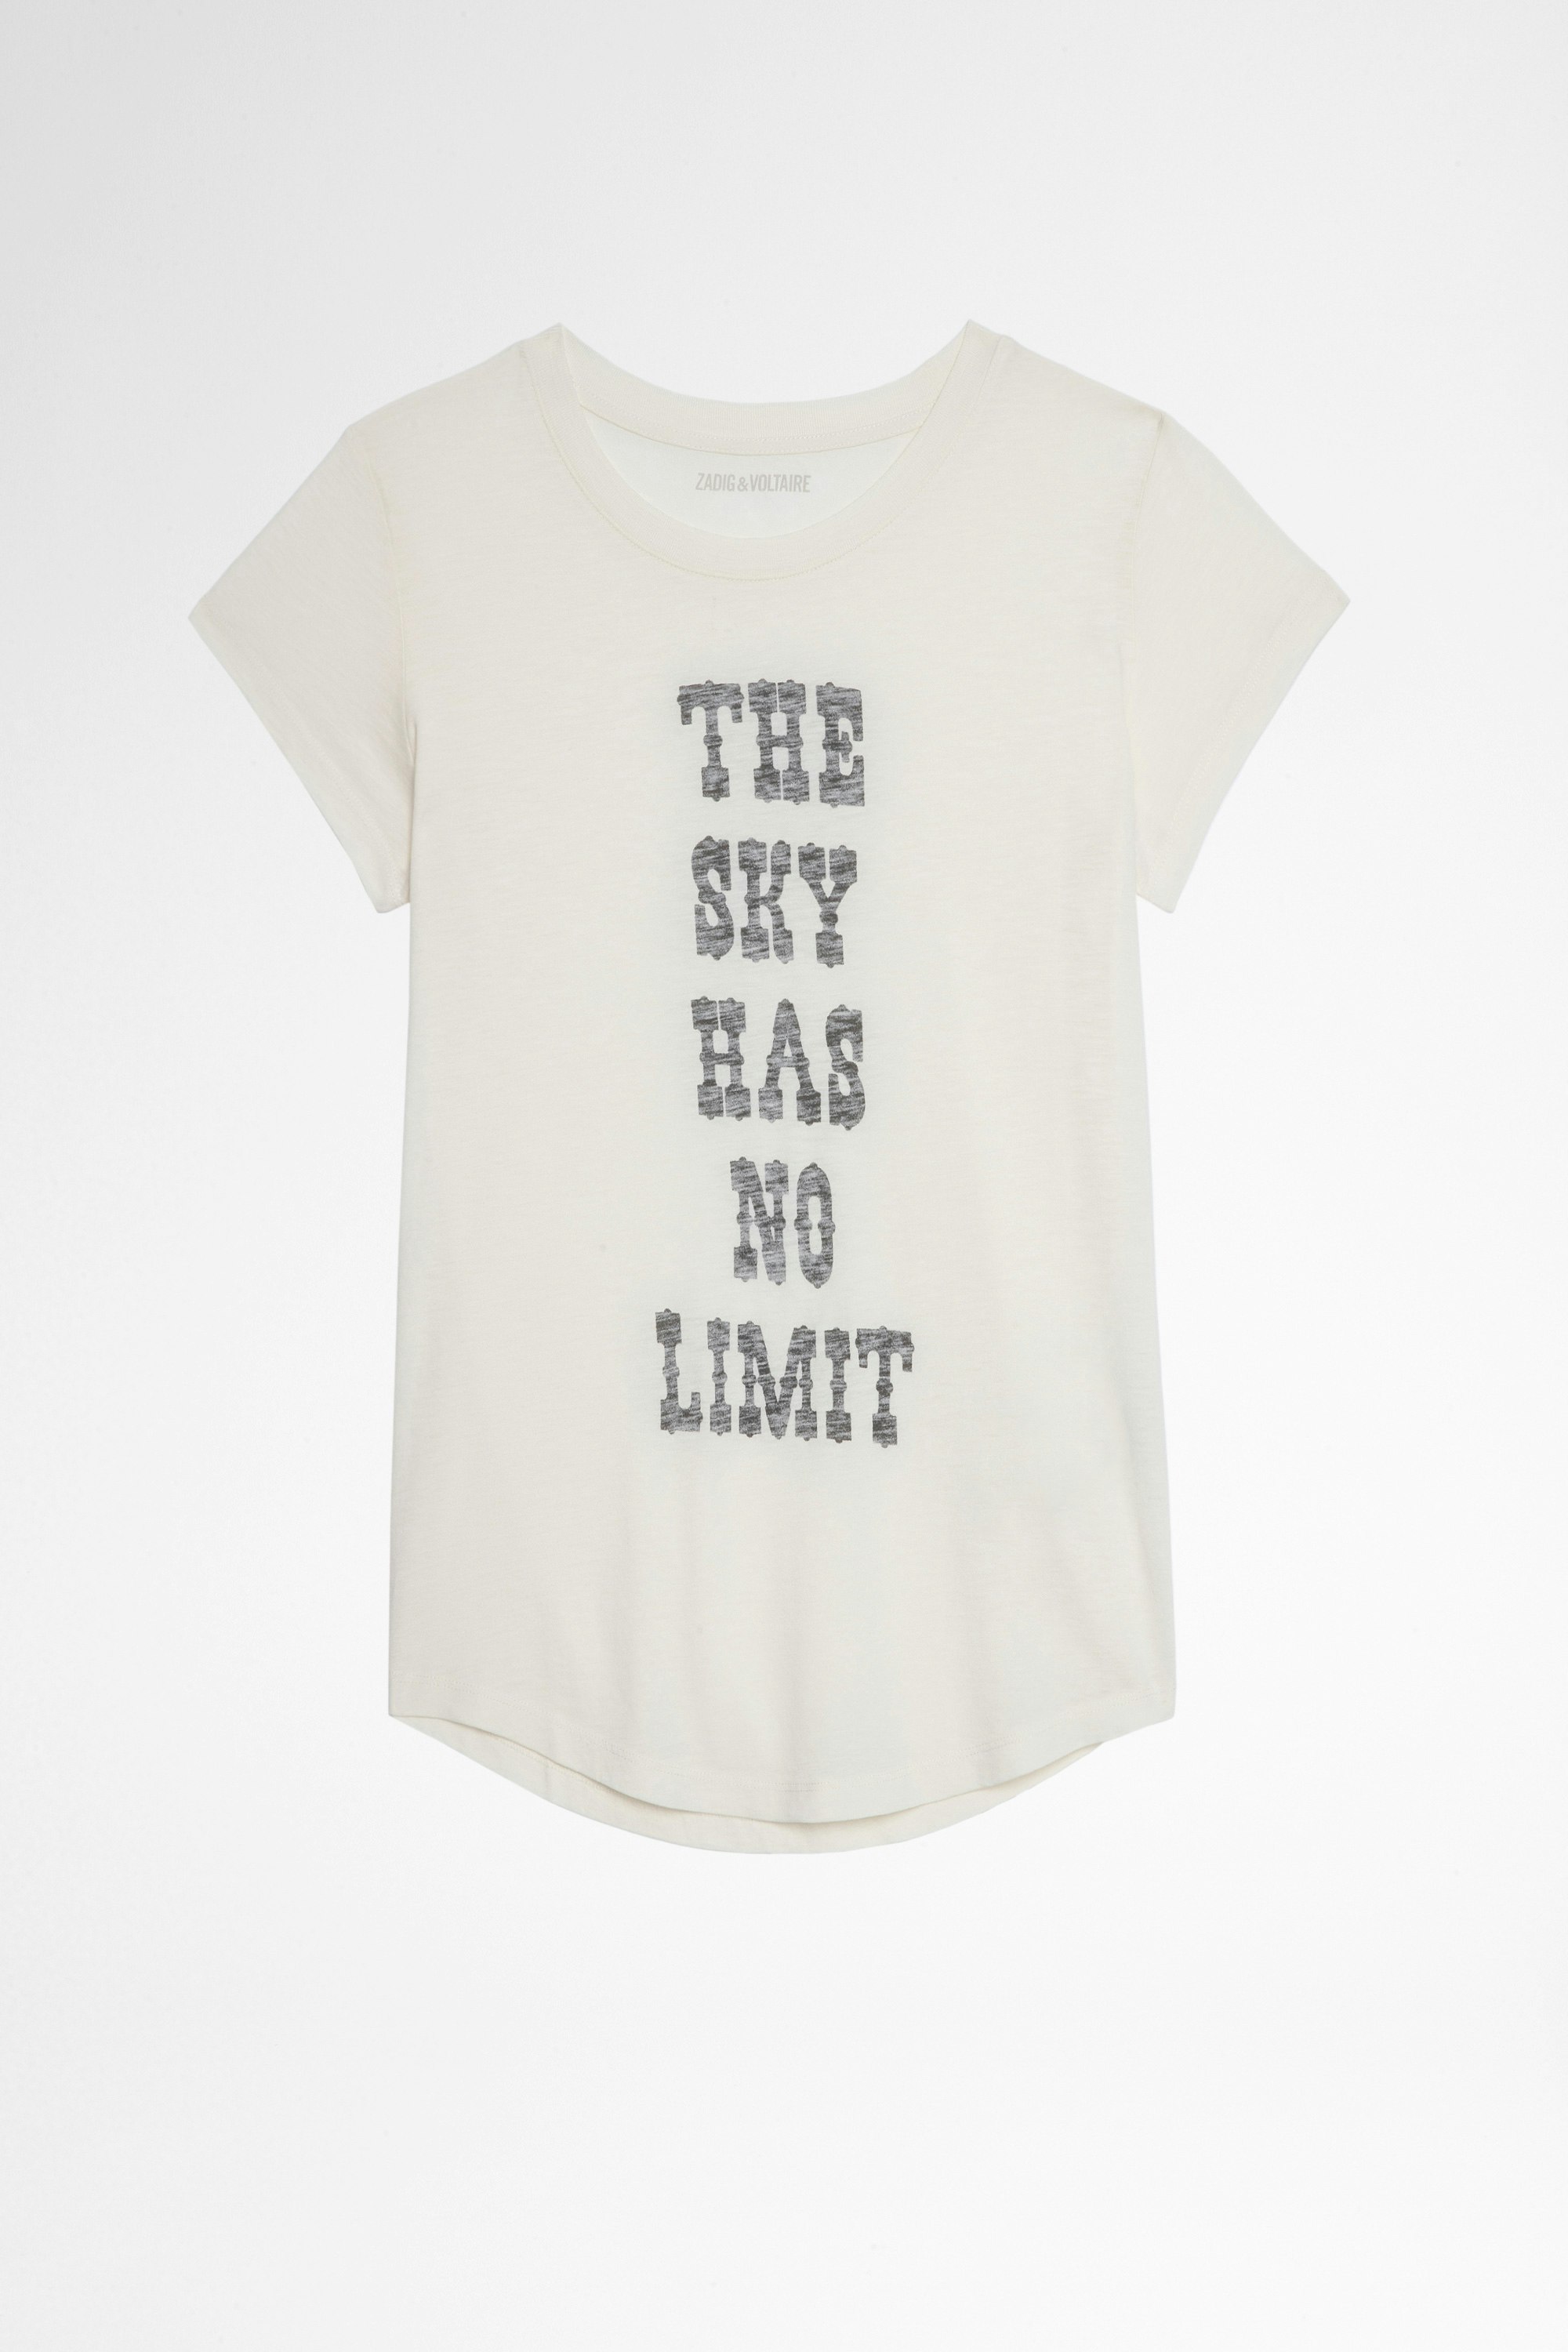 T-Shirt Woop Tee-shirt blanc The Sky has no limit